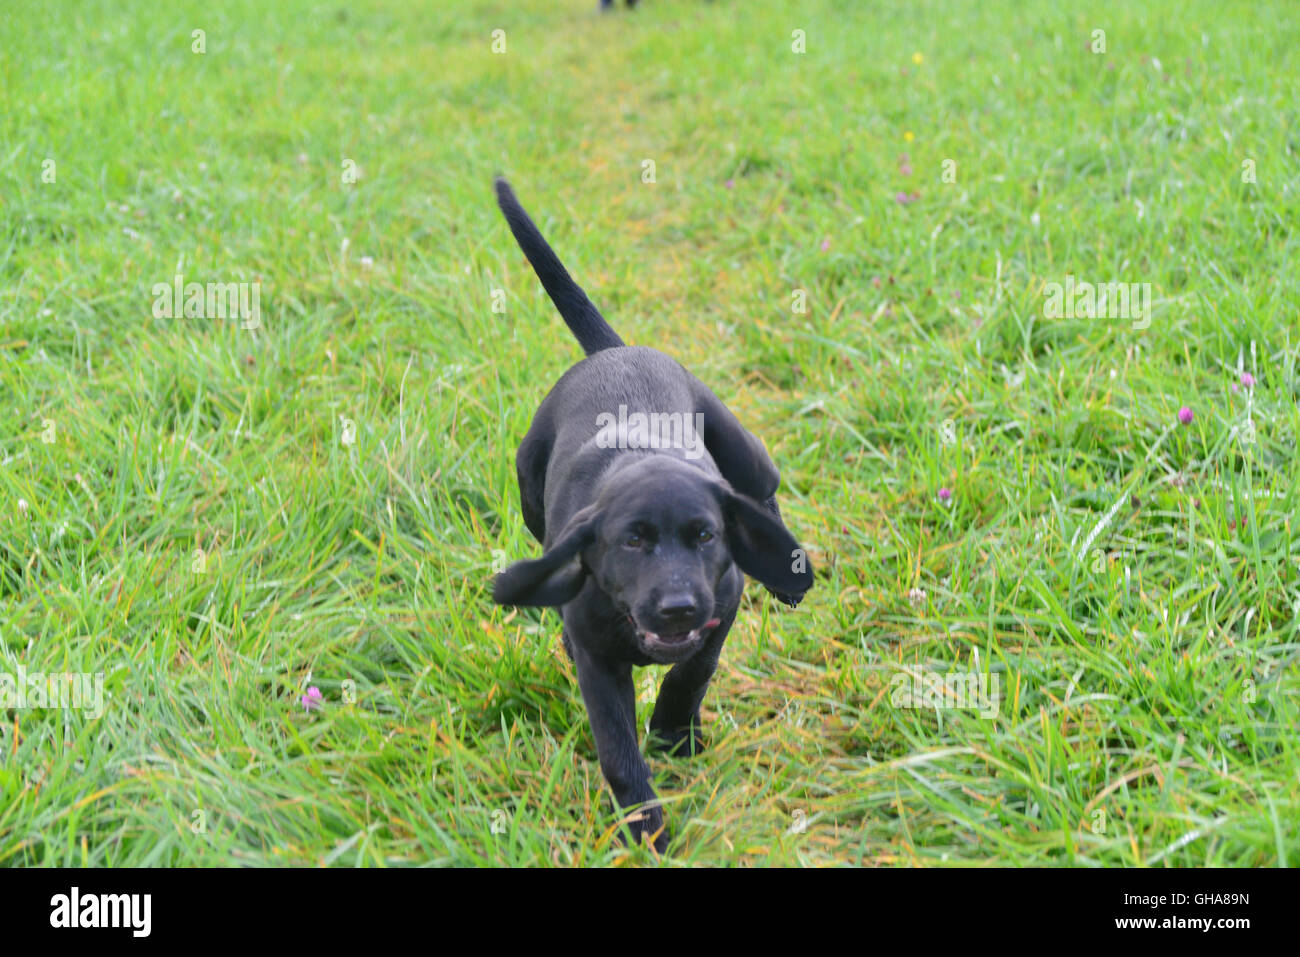 Black Labrador puppy in field Stock Photo